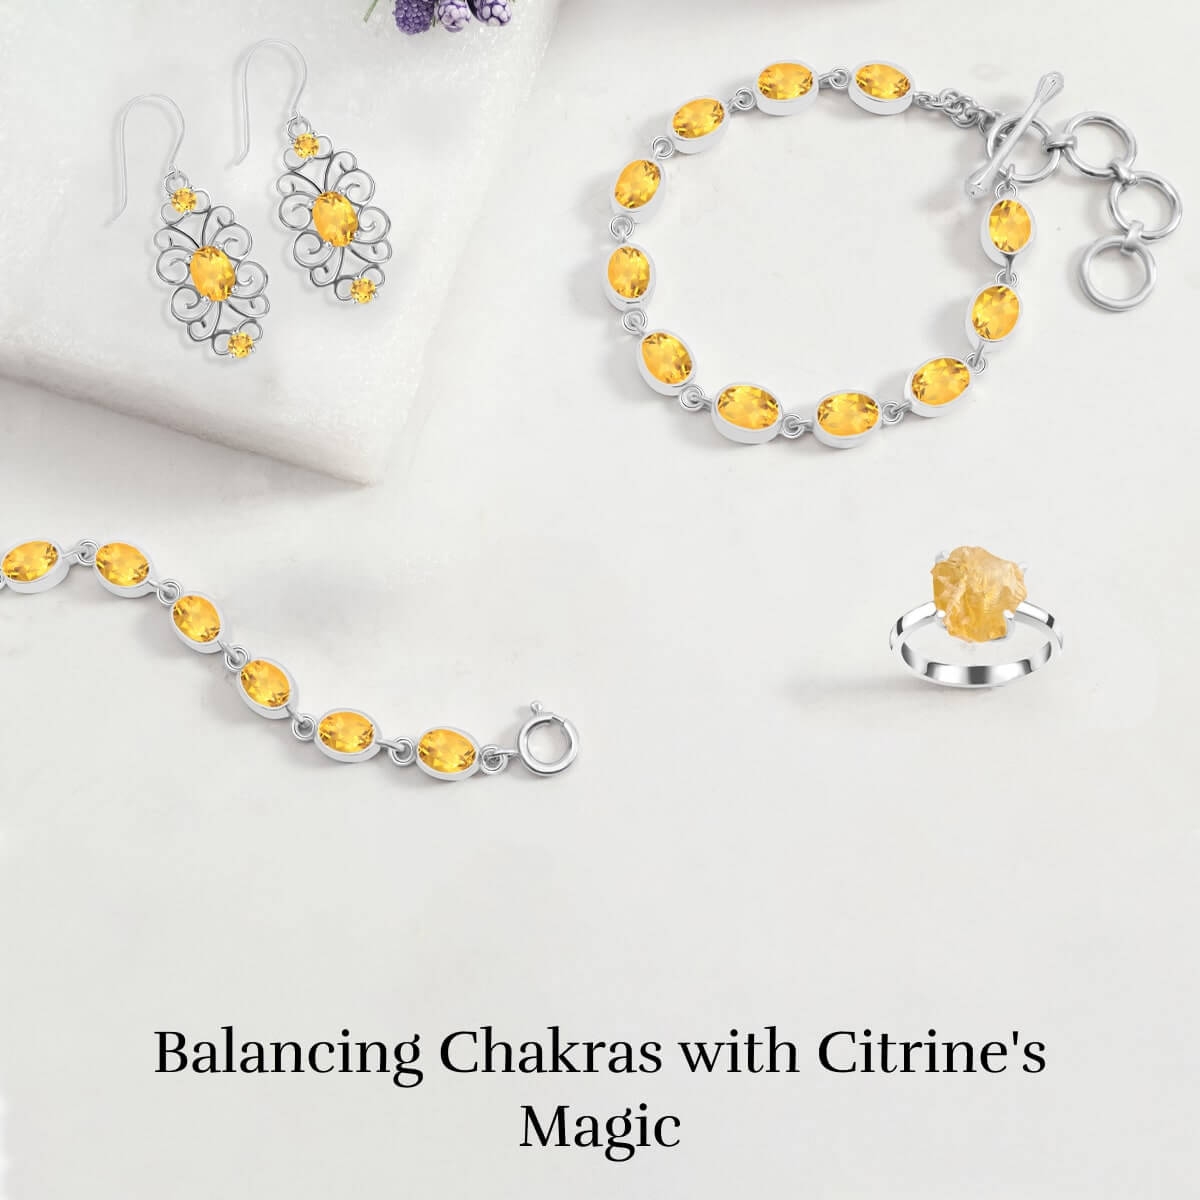 Citrine Chakra Balancing Healing Properties